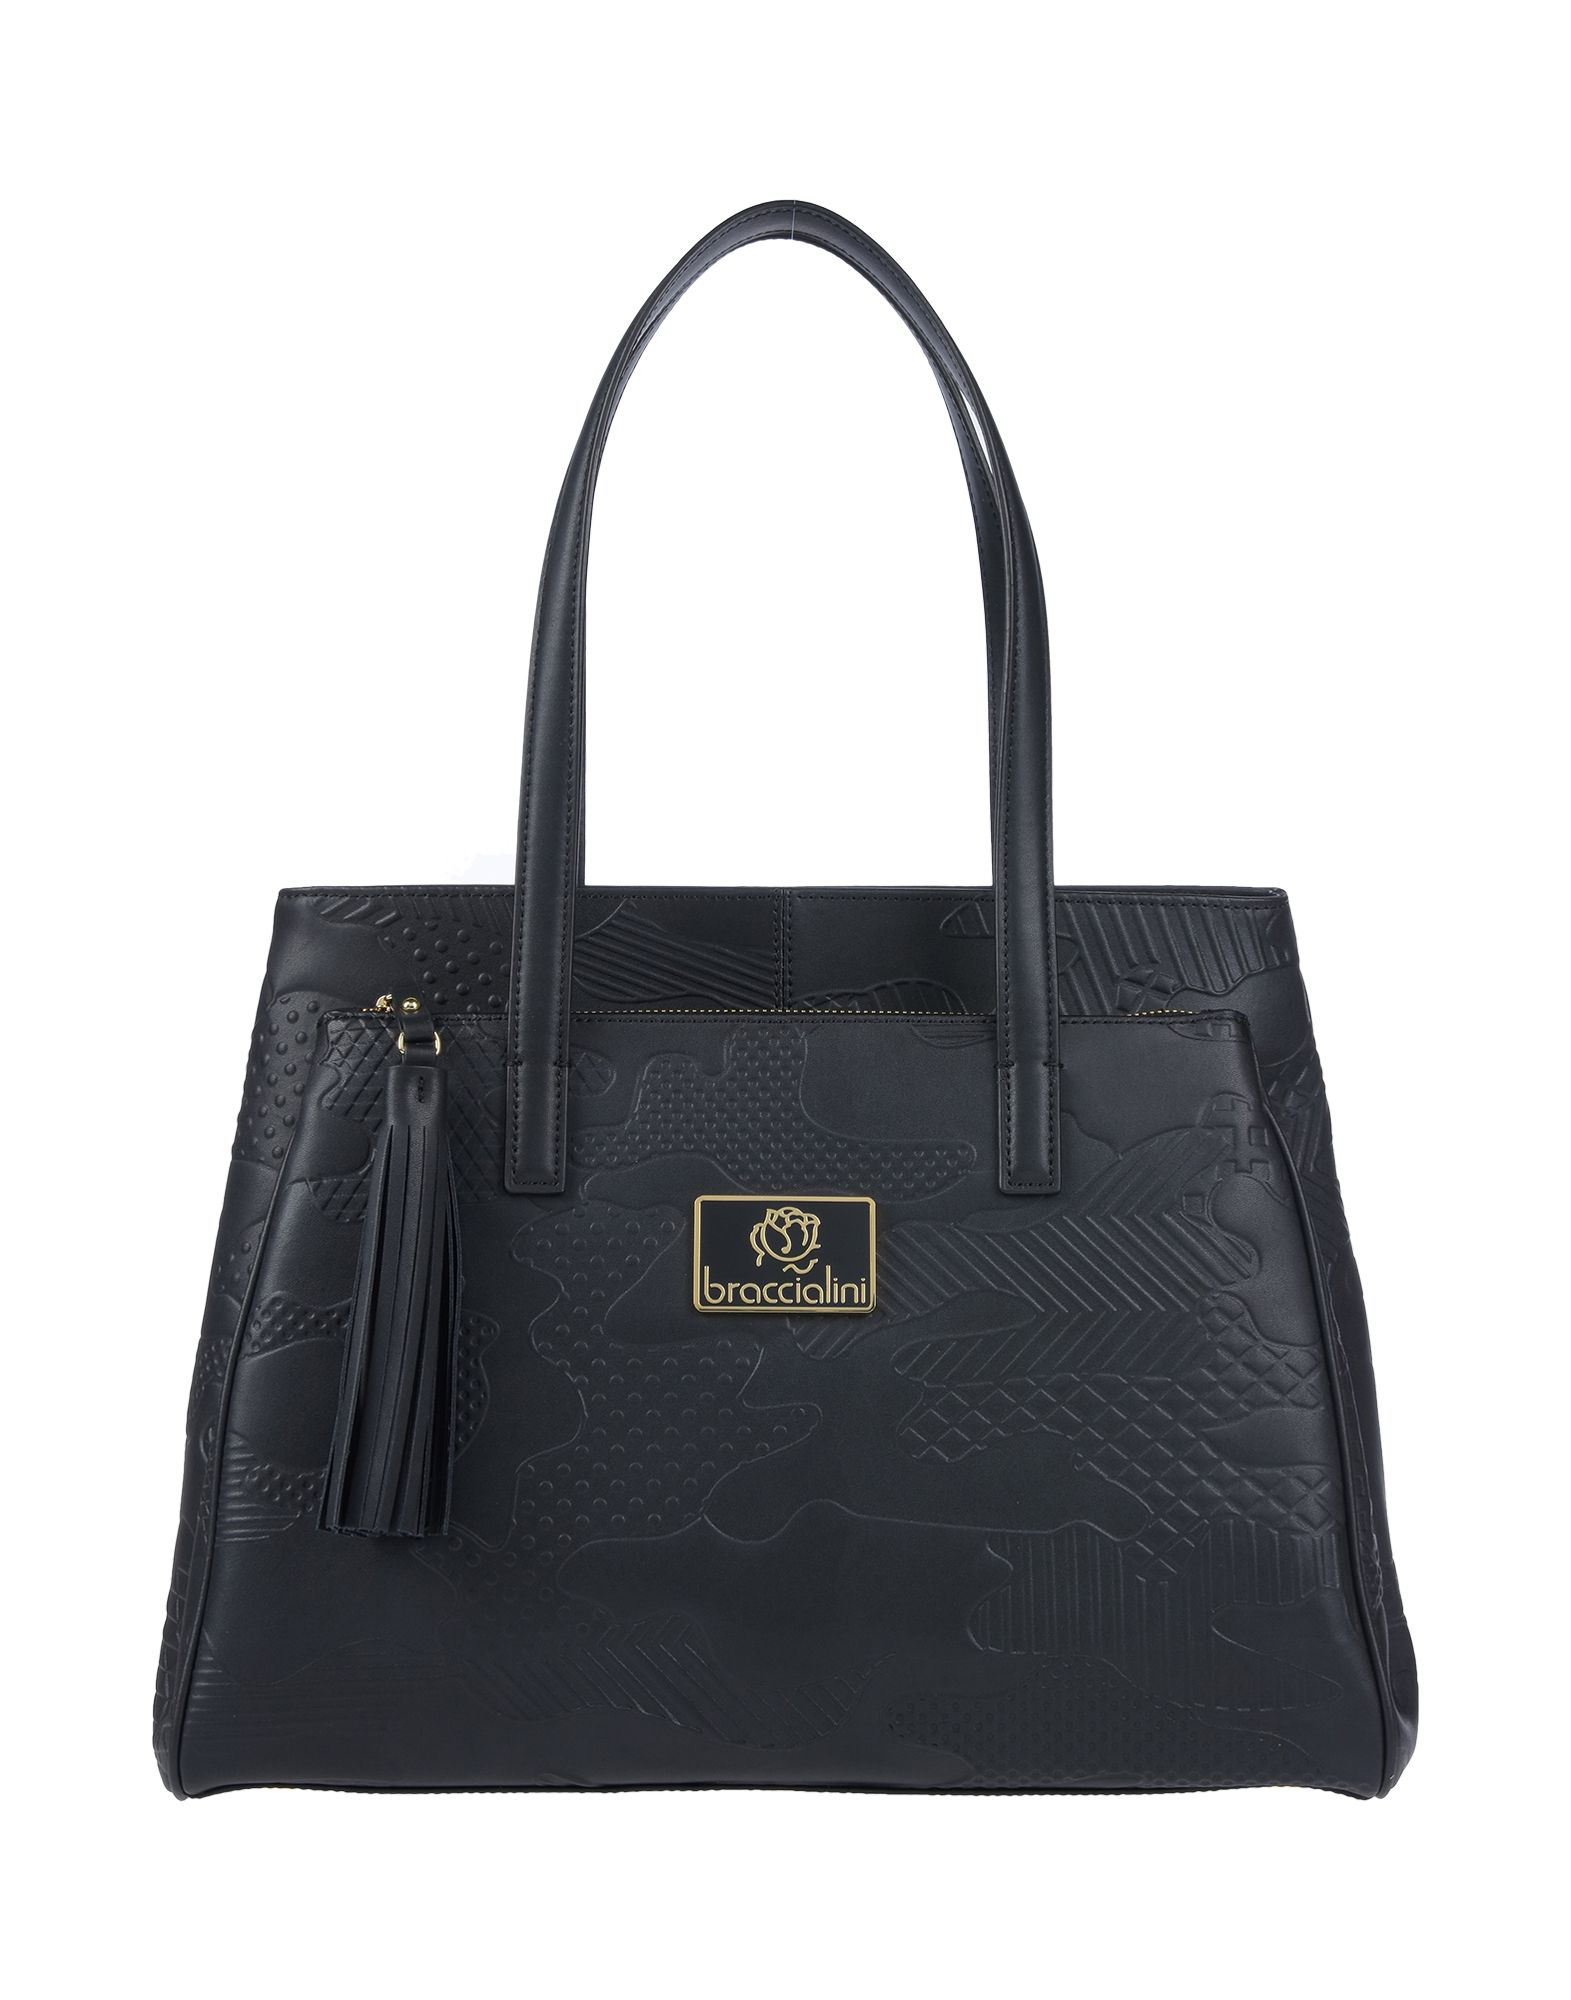 Braccialini Handbag In Black | ModeSens